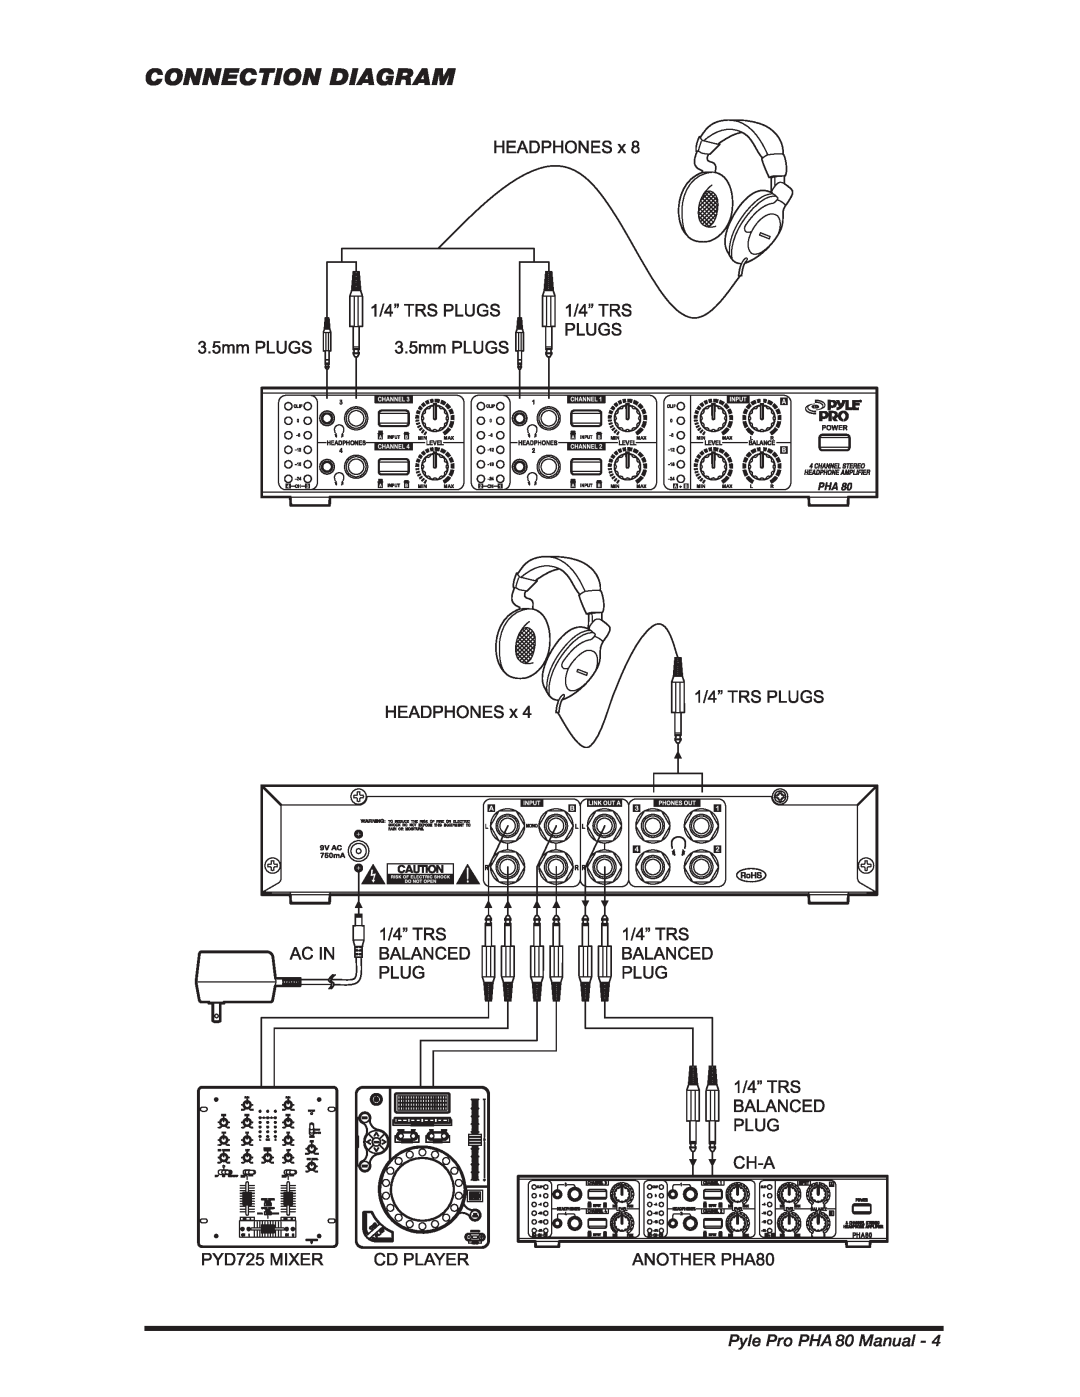 PYLE Audio PHA80 manual Connection Diagram, Pyle Pro PHA 80 Manual 